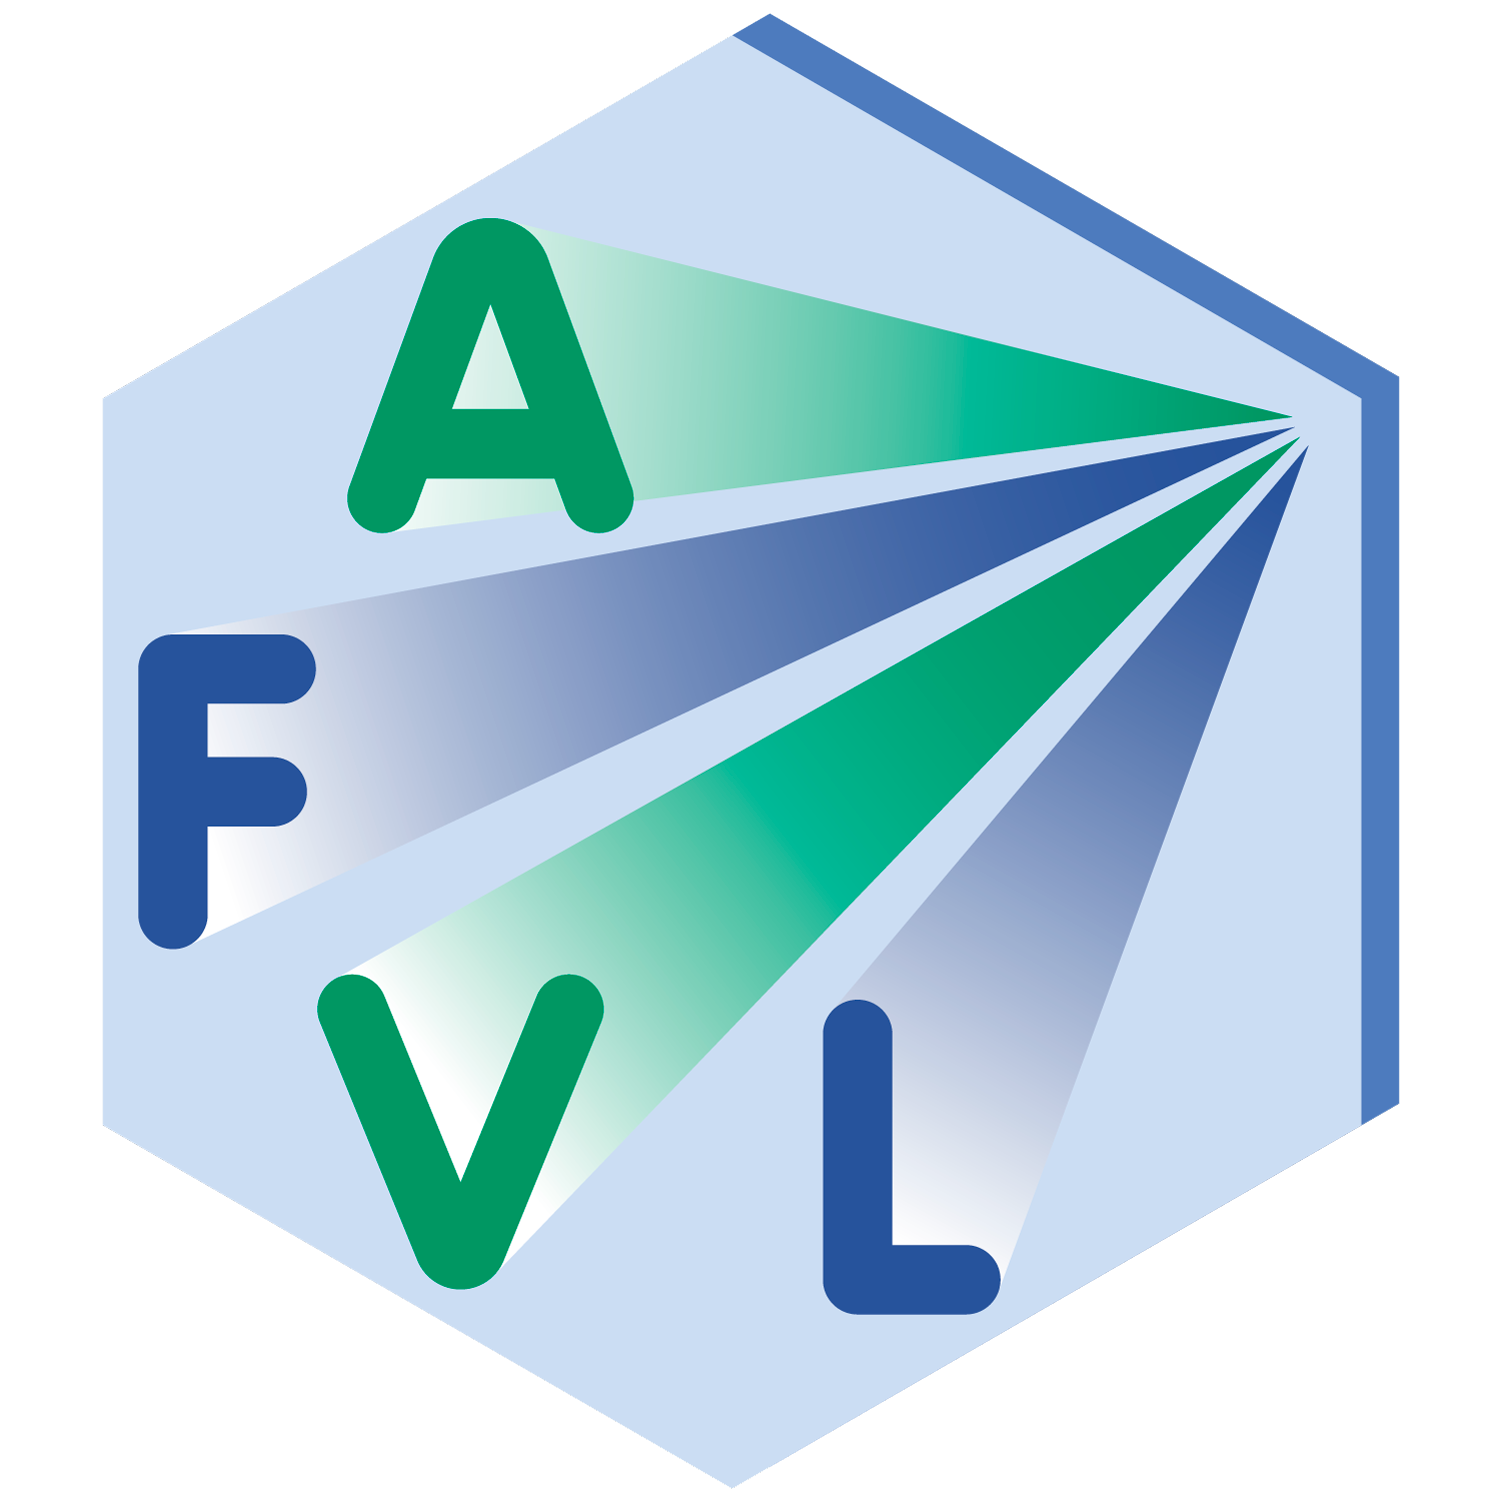 AFVL logo quadri 2207